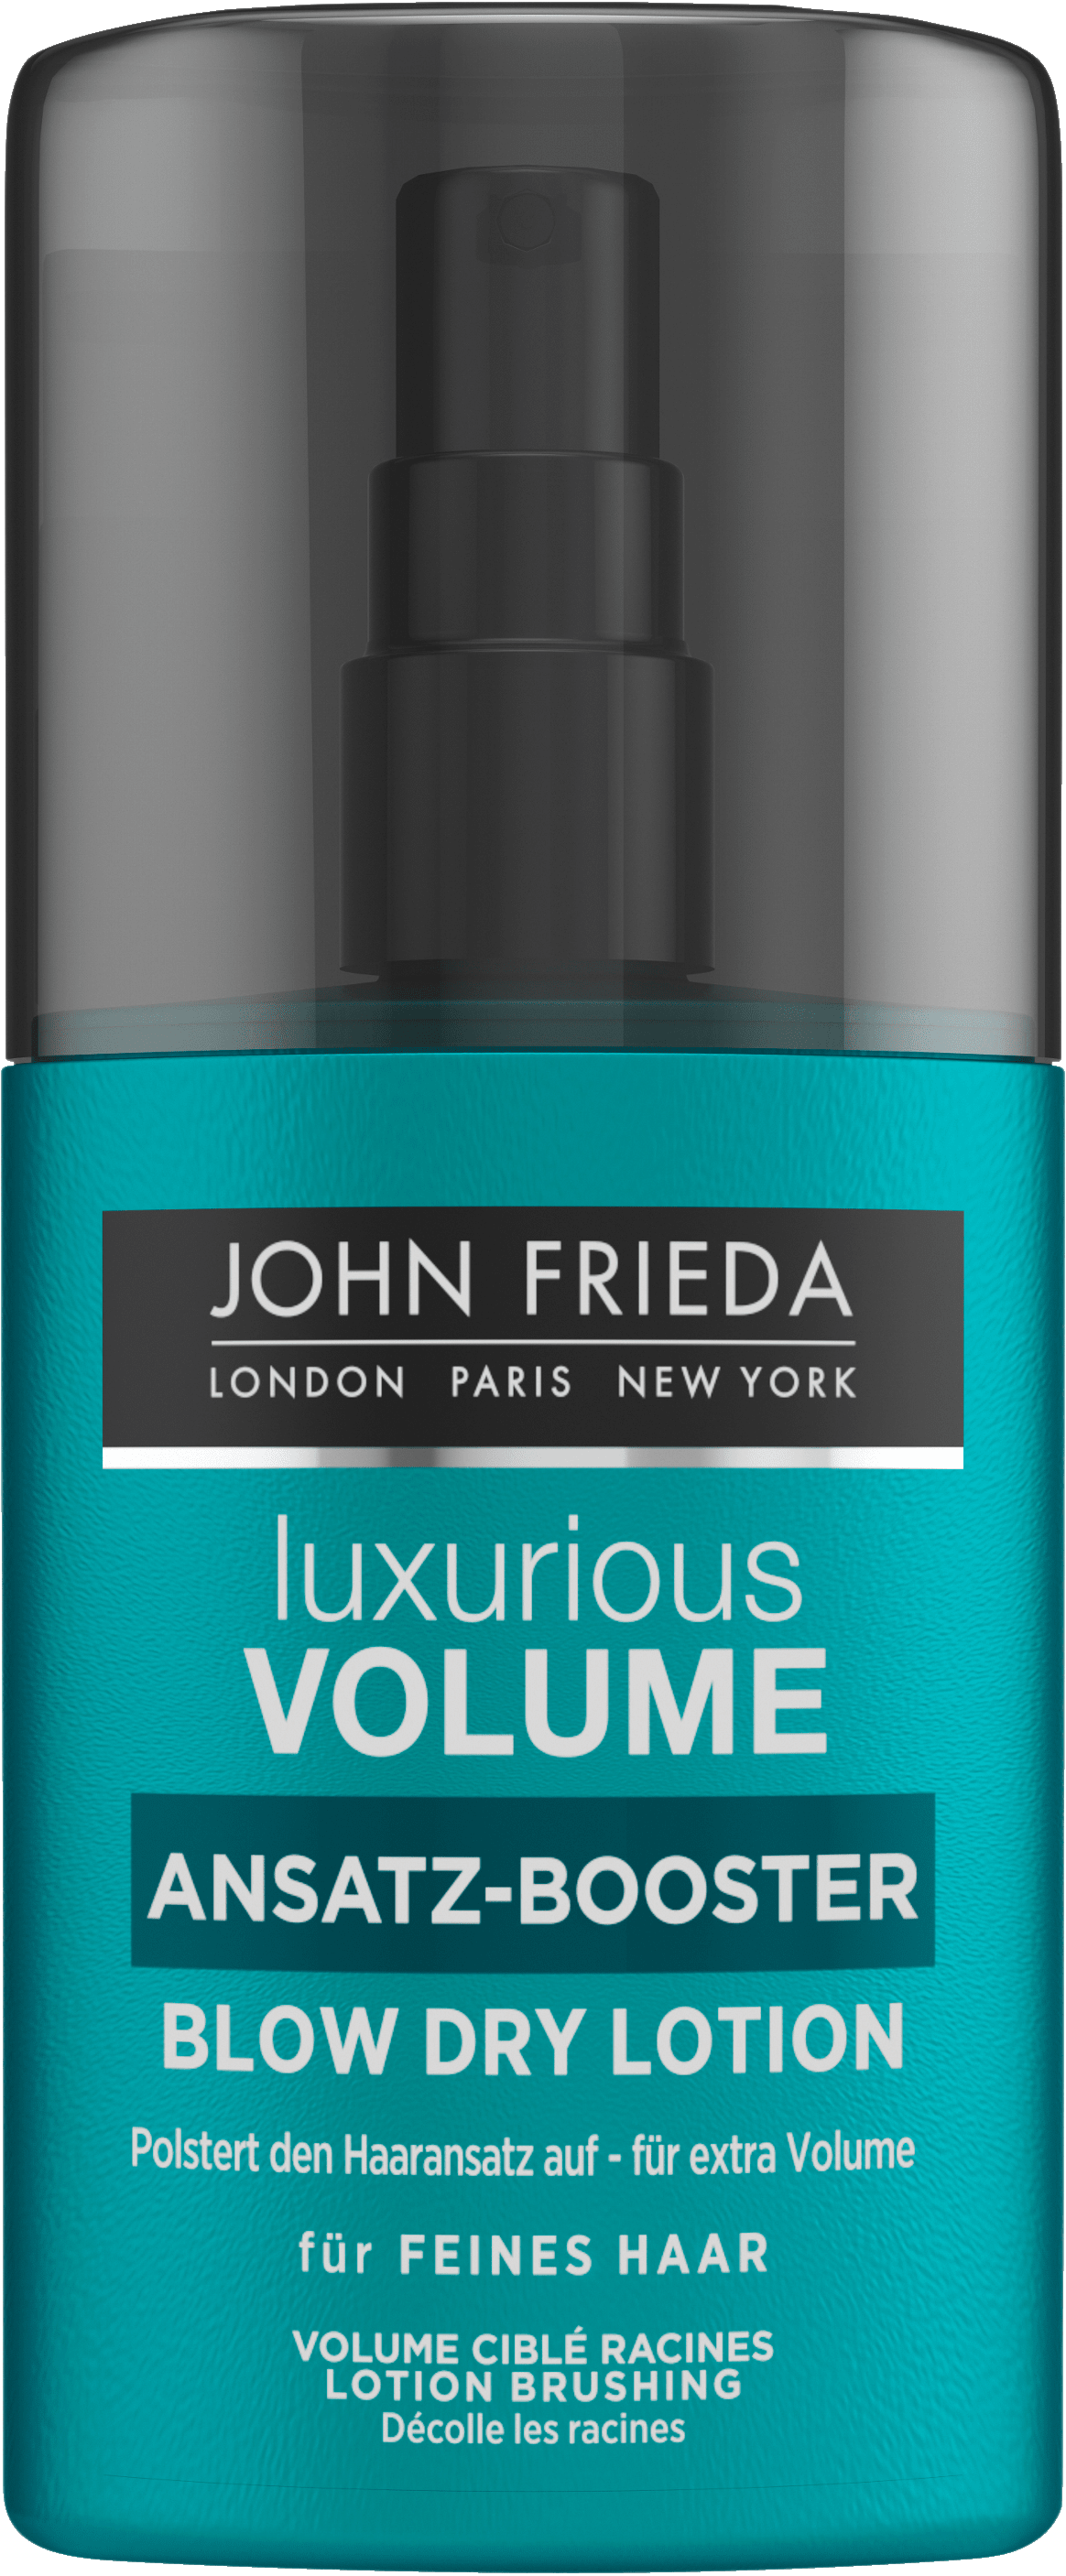 John Frieda Föhnlotion Luxurious Volume Blow Dry Lotion Ansatz-Booster, 125 Ml